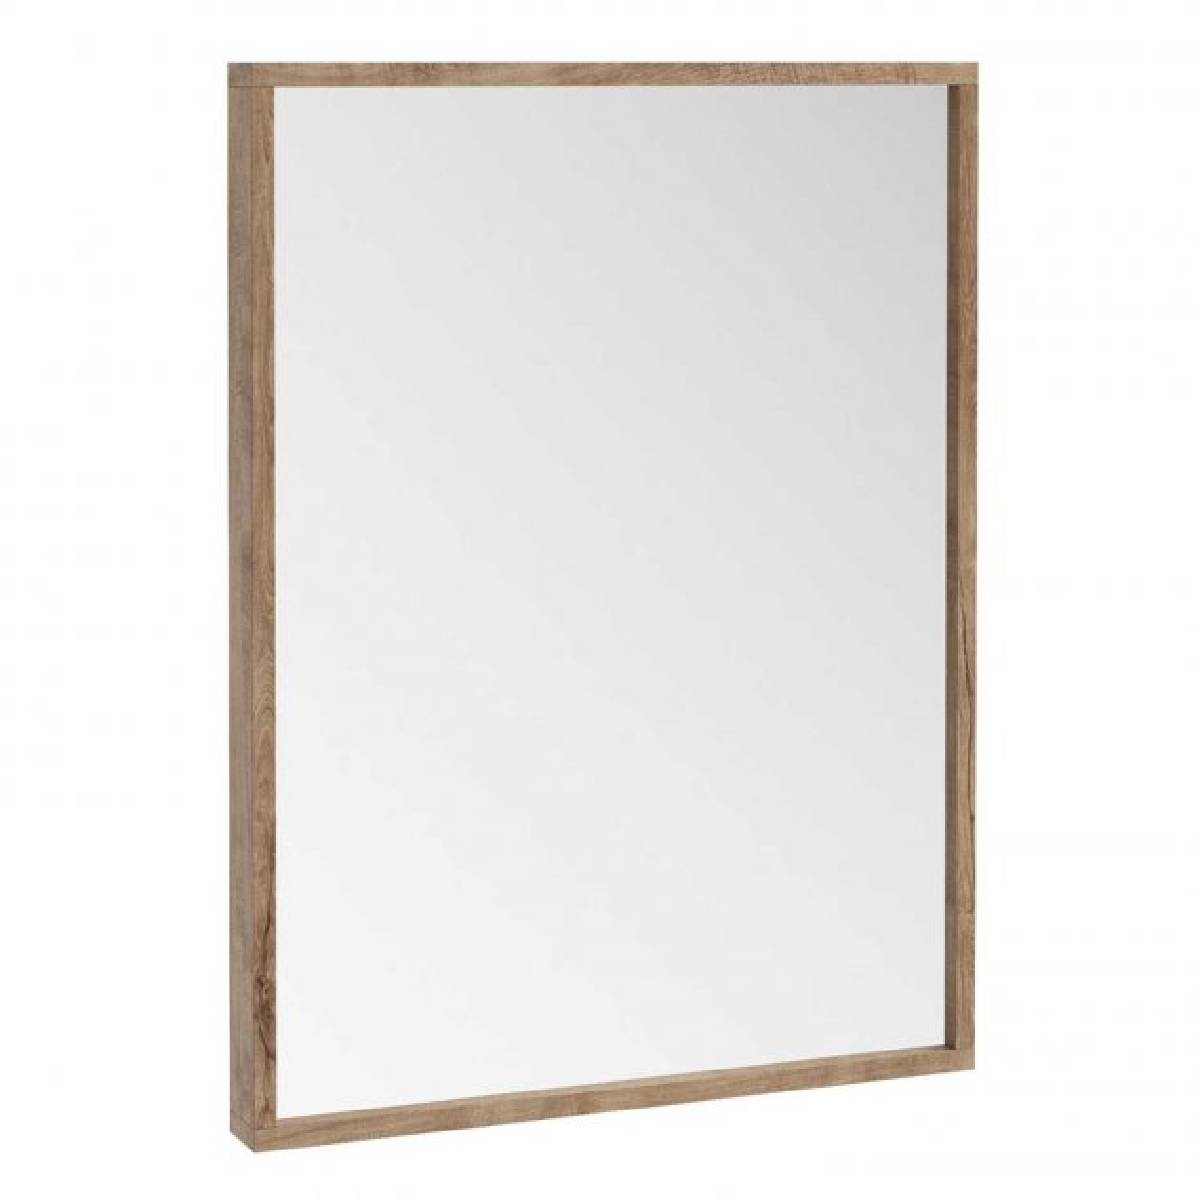 Ambience 600 x 800mm Simplistic Mirror - Rustic Oak (13152)